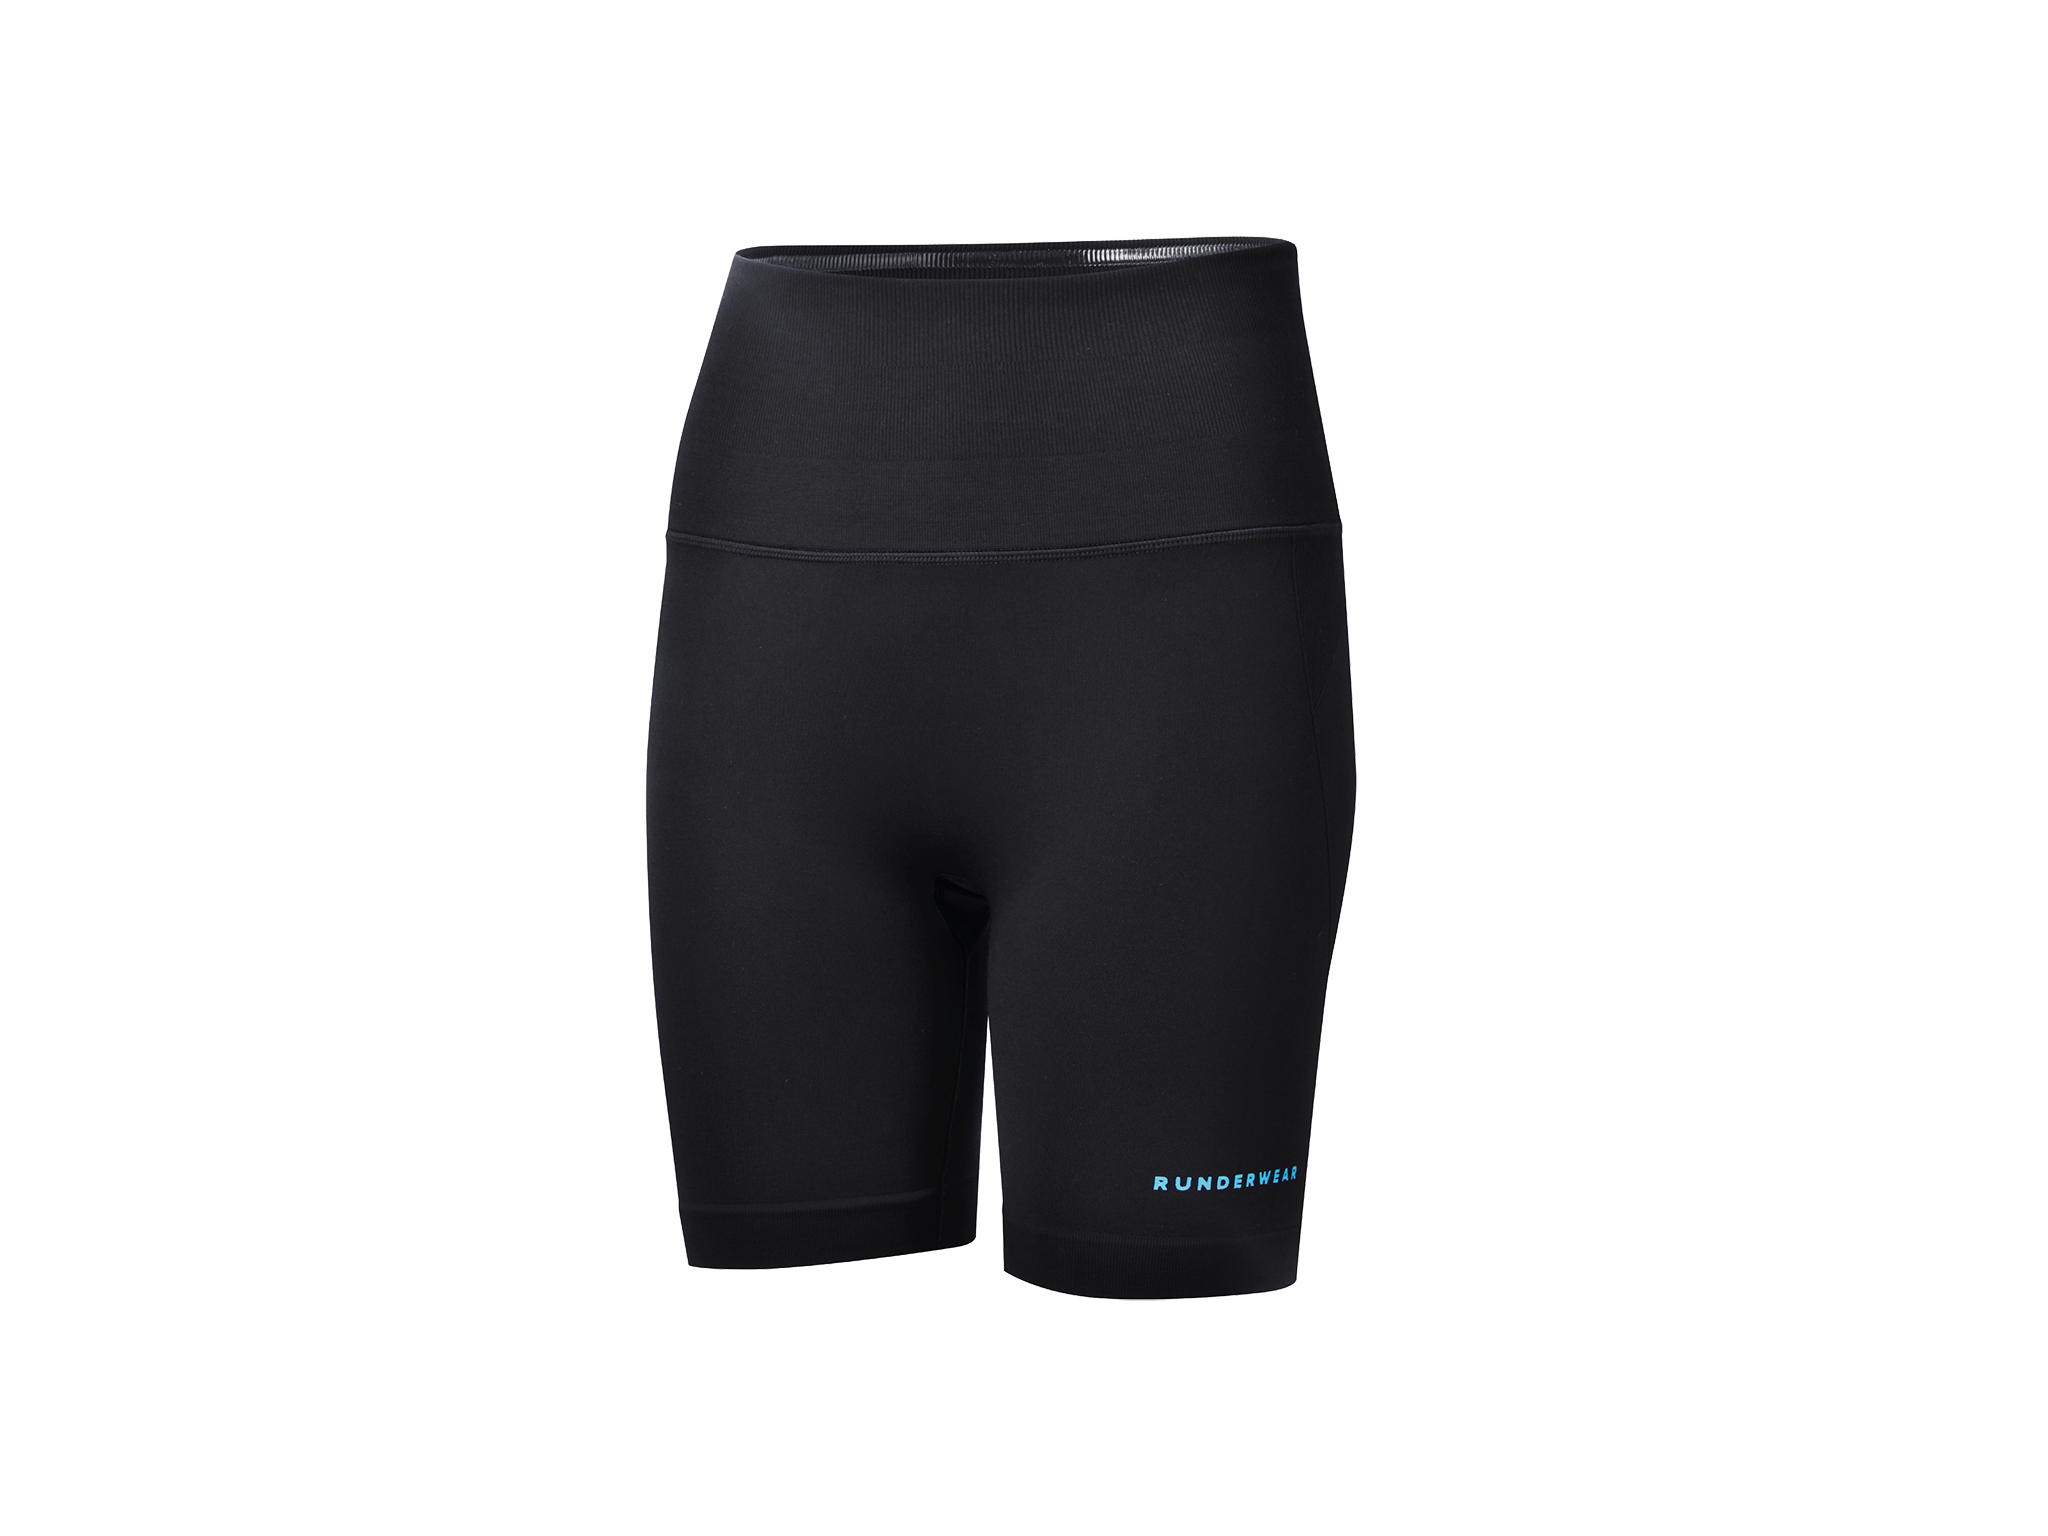 Runderwear women’s high-waisted leggings running shorts.png